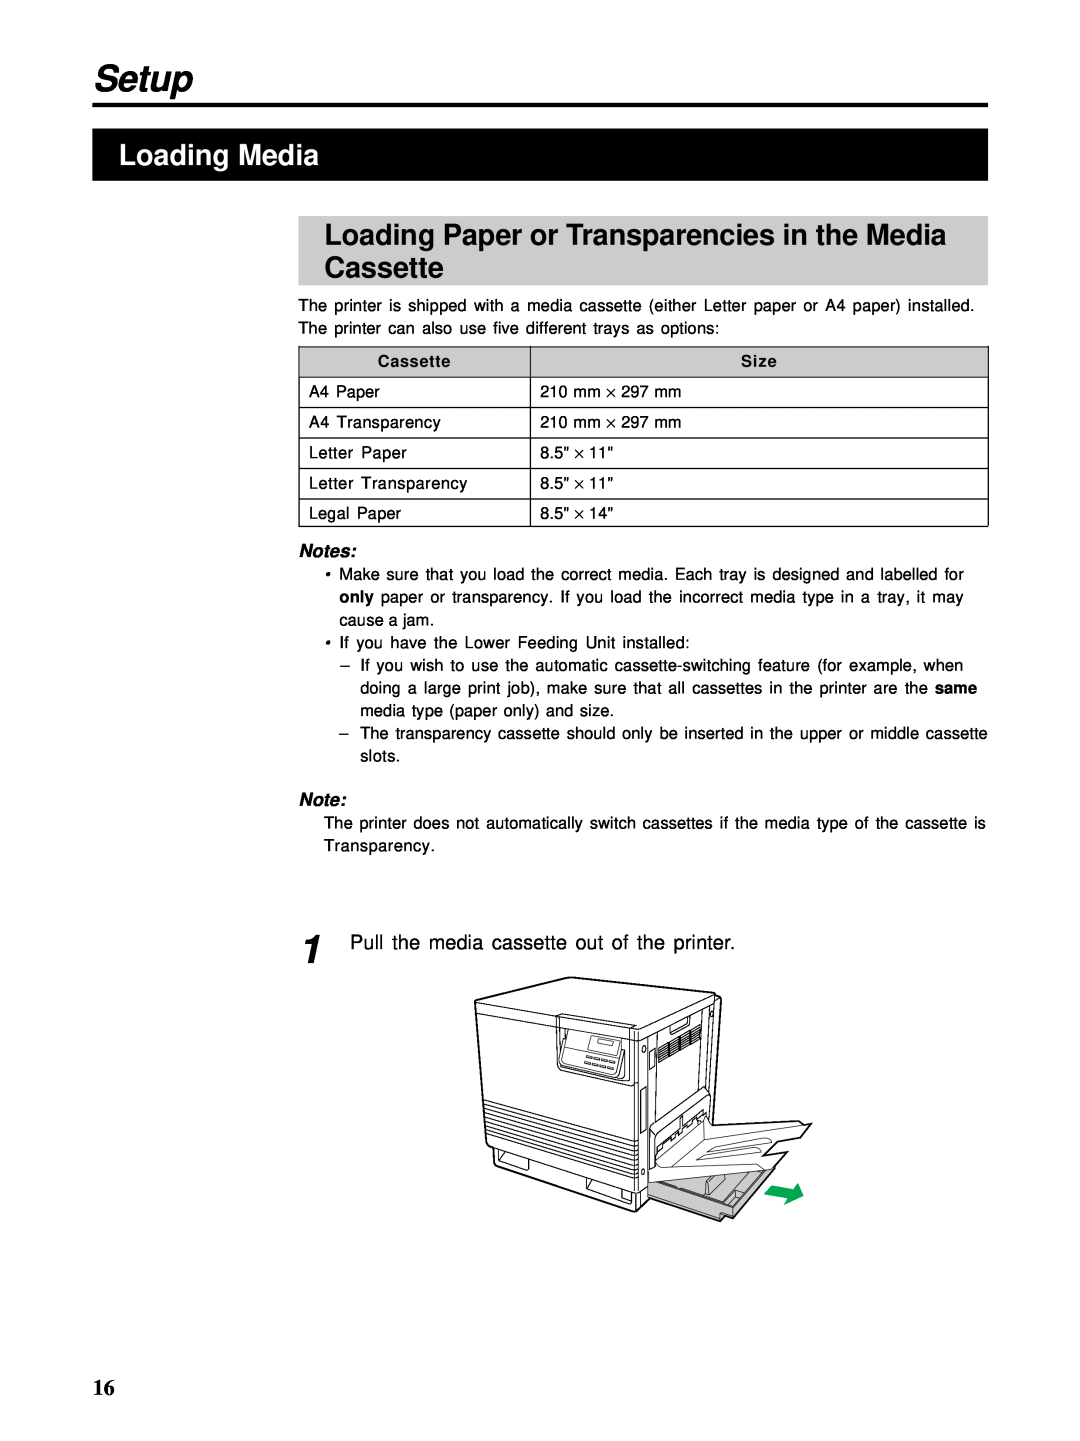 HP Ci 1100 manual Loading Media, Loading Paper or Transparencies in the Media Cassette, Setup 